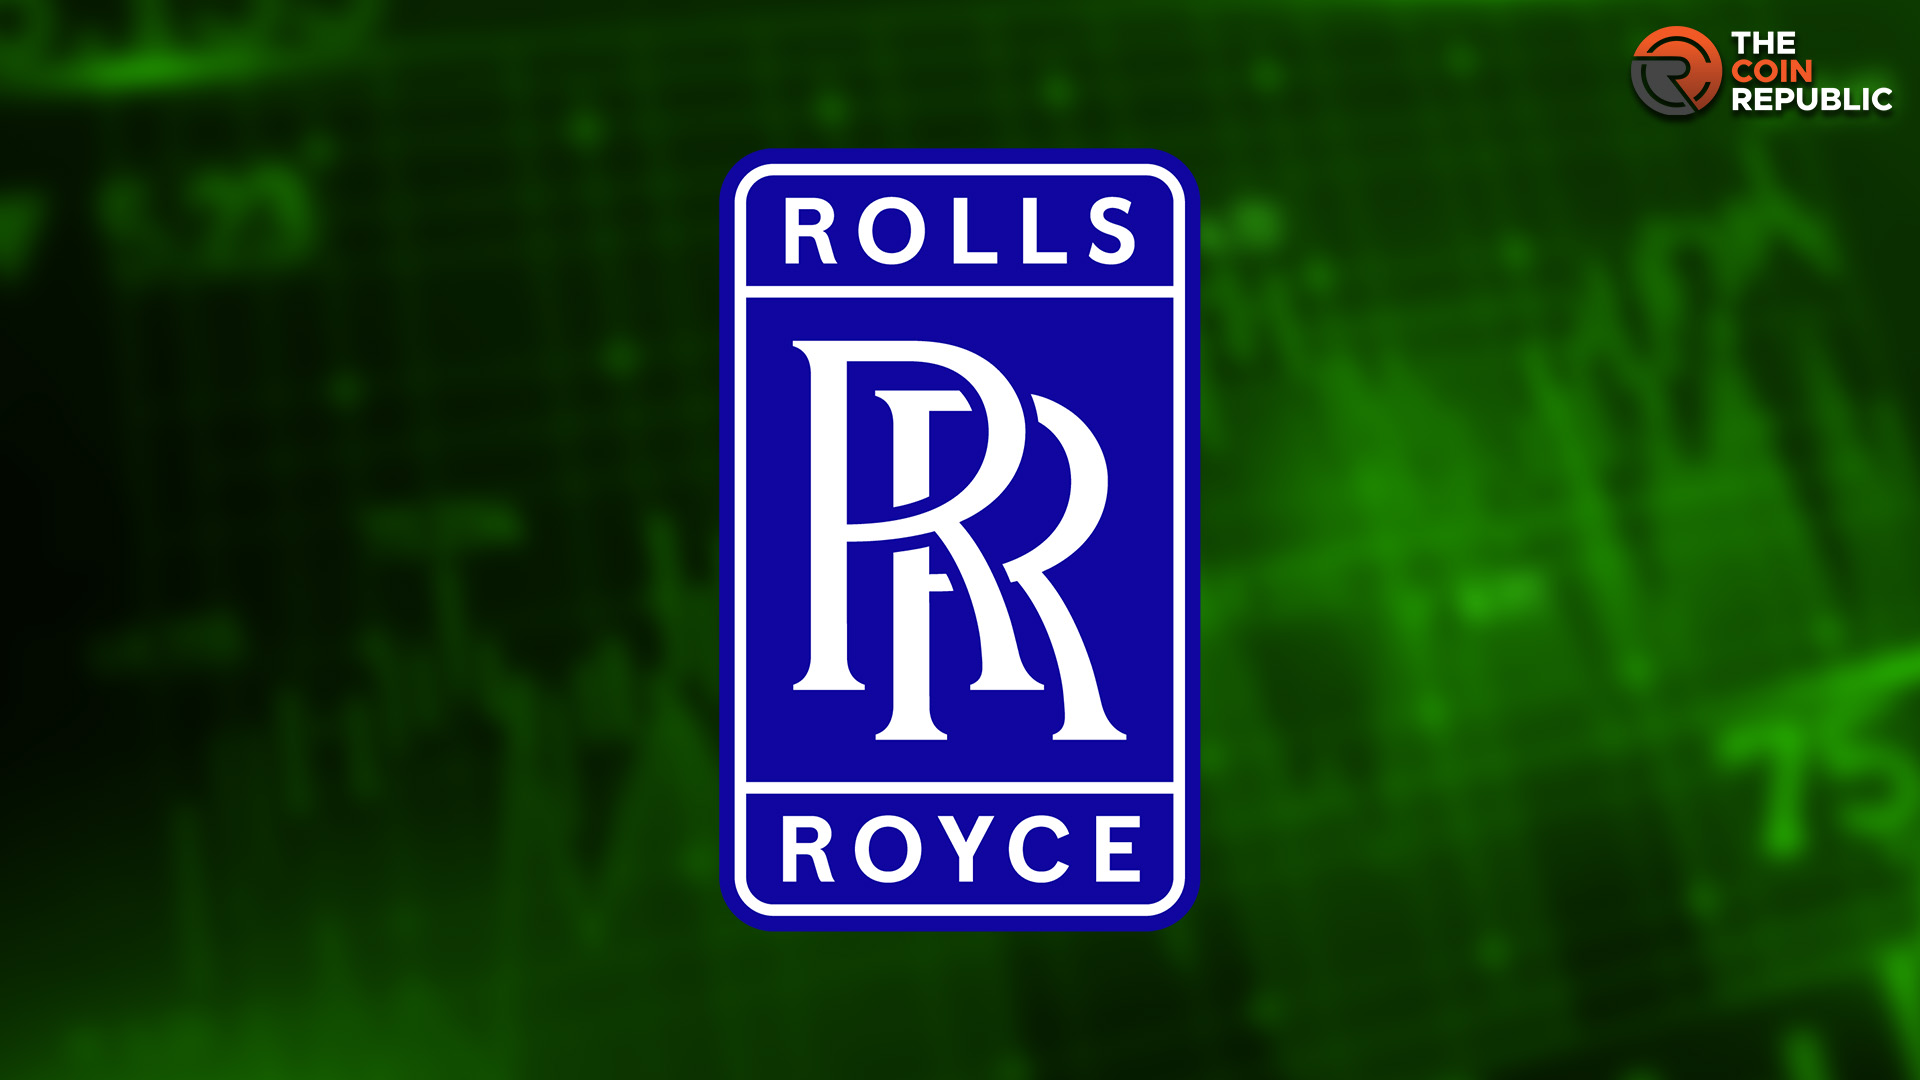 RR Stock Price Prediction: Will Rolls-Royce Hit 250 GBP?